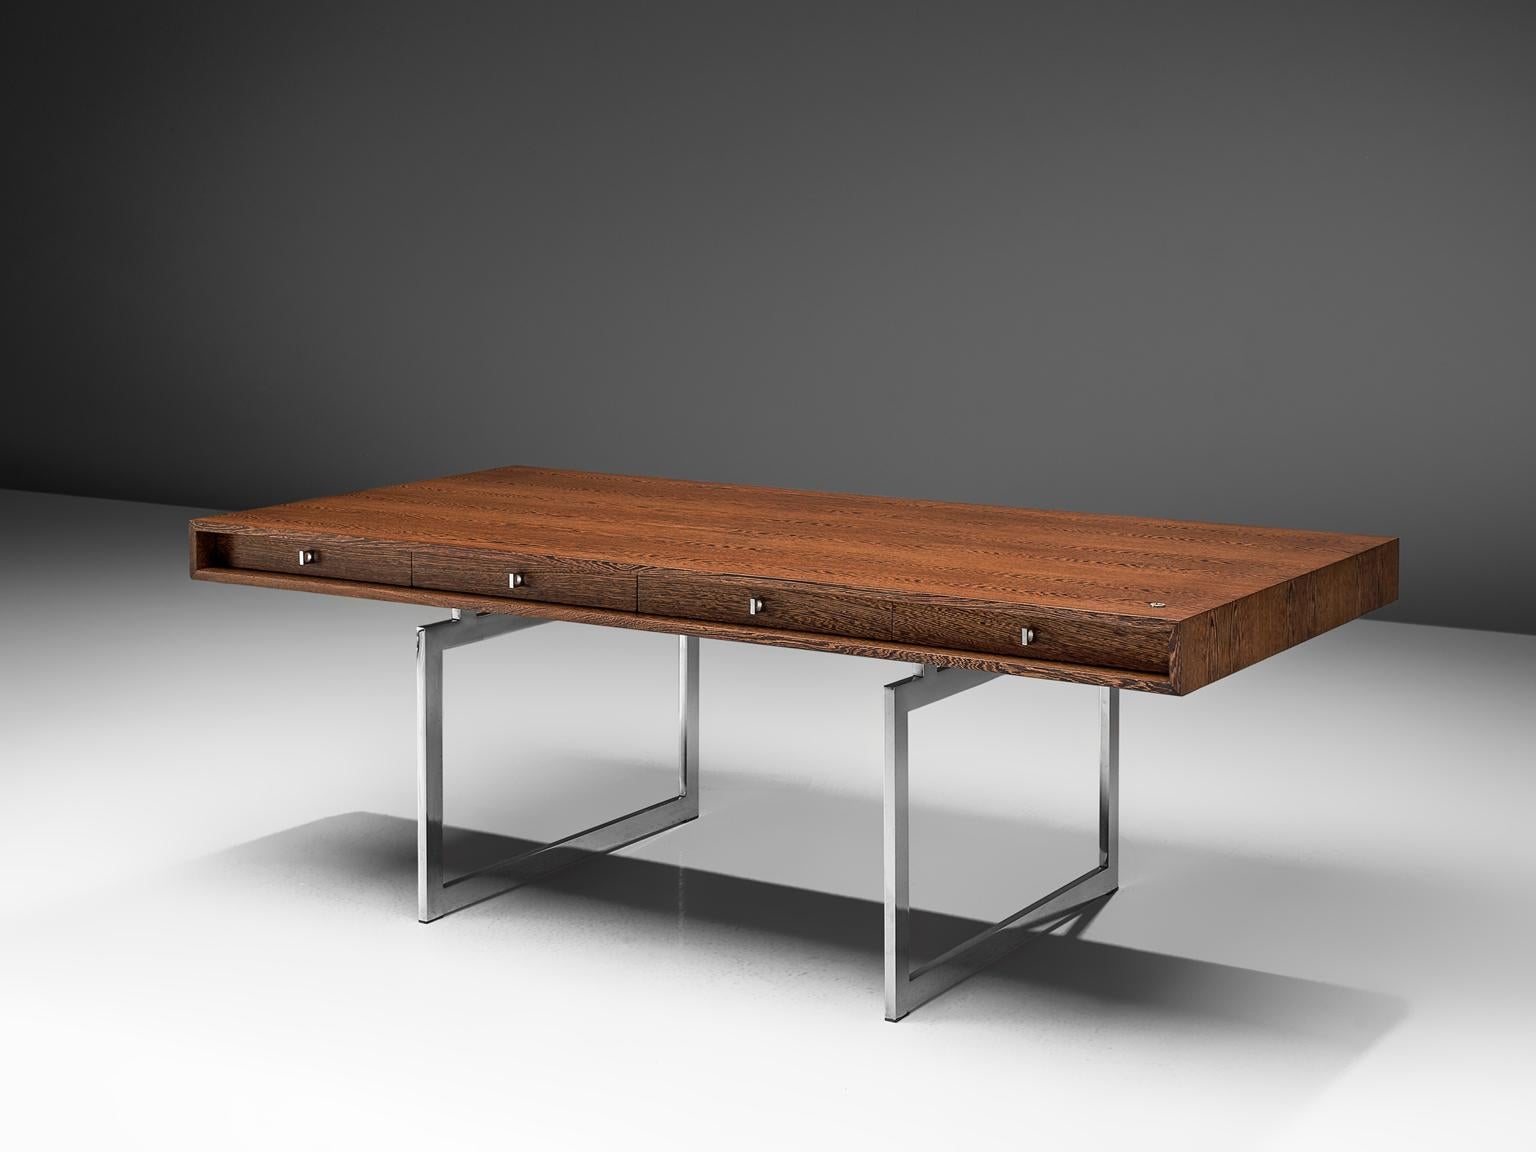 Bodil Kjaer for E. Pedersen & Søn, table model 901, wenge and chrome steel, Denmark, 1959.

This freestanding desk in wenge is designed by the Danish designer Bodil Kjaer. The desk can be used with multiple purposes, as a writing table, desk or